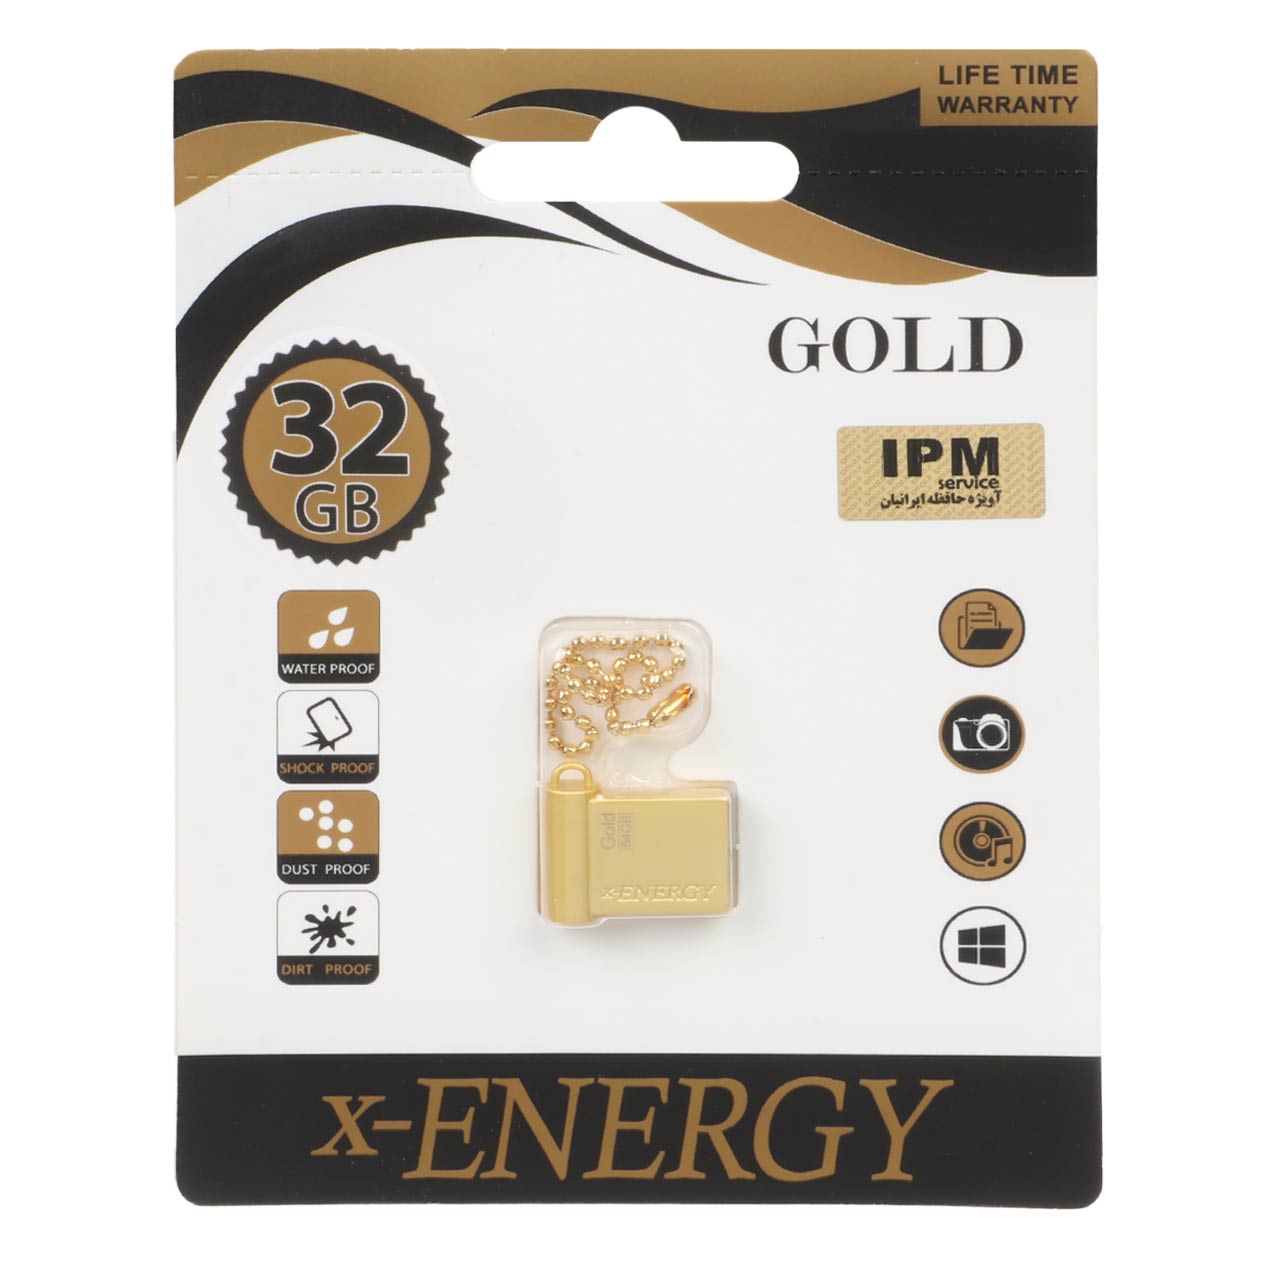 X-ENERGY Gold USB2.0 Flash Memory-32GB